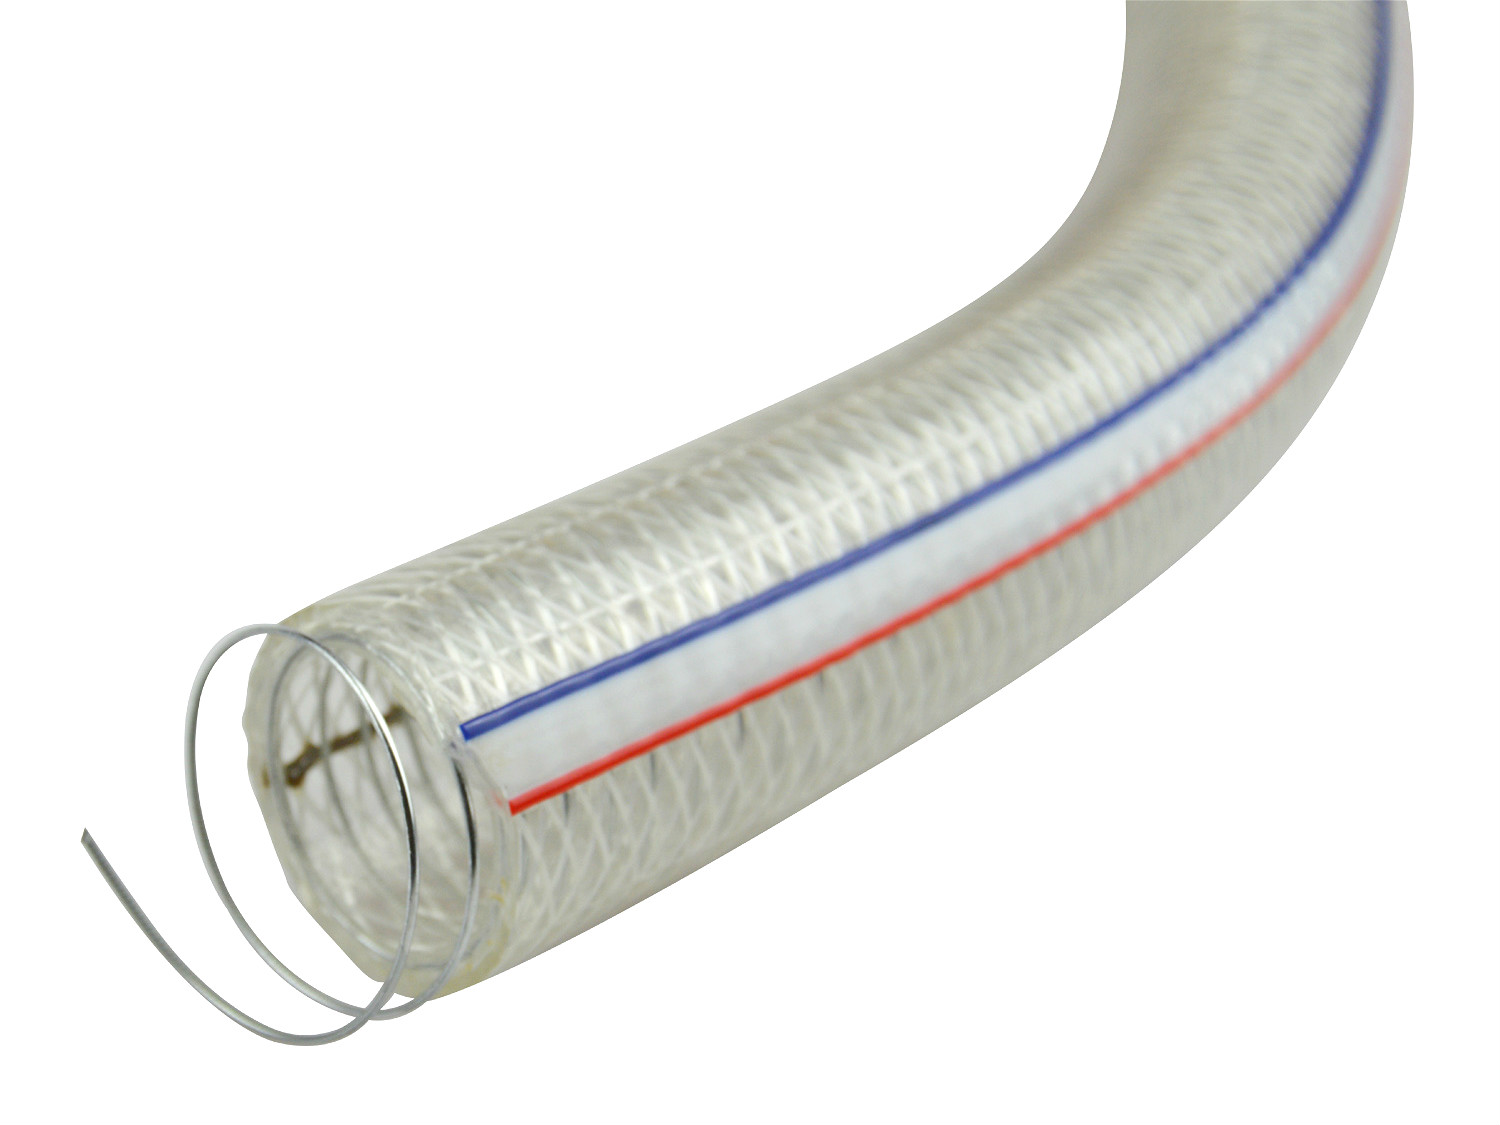 2.PVC Wire Yarn Reinforced Vacuum Hose